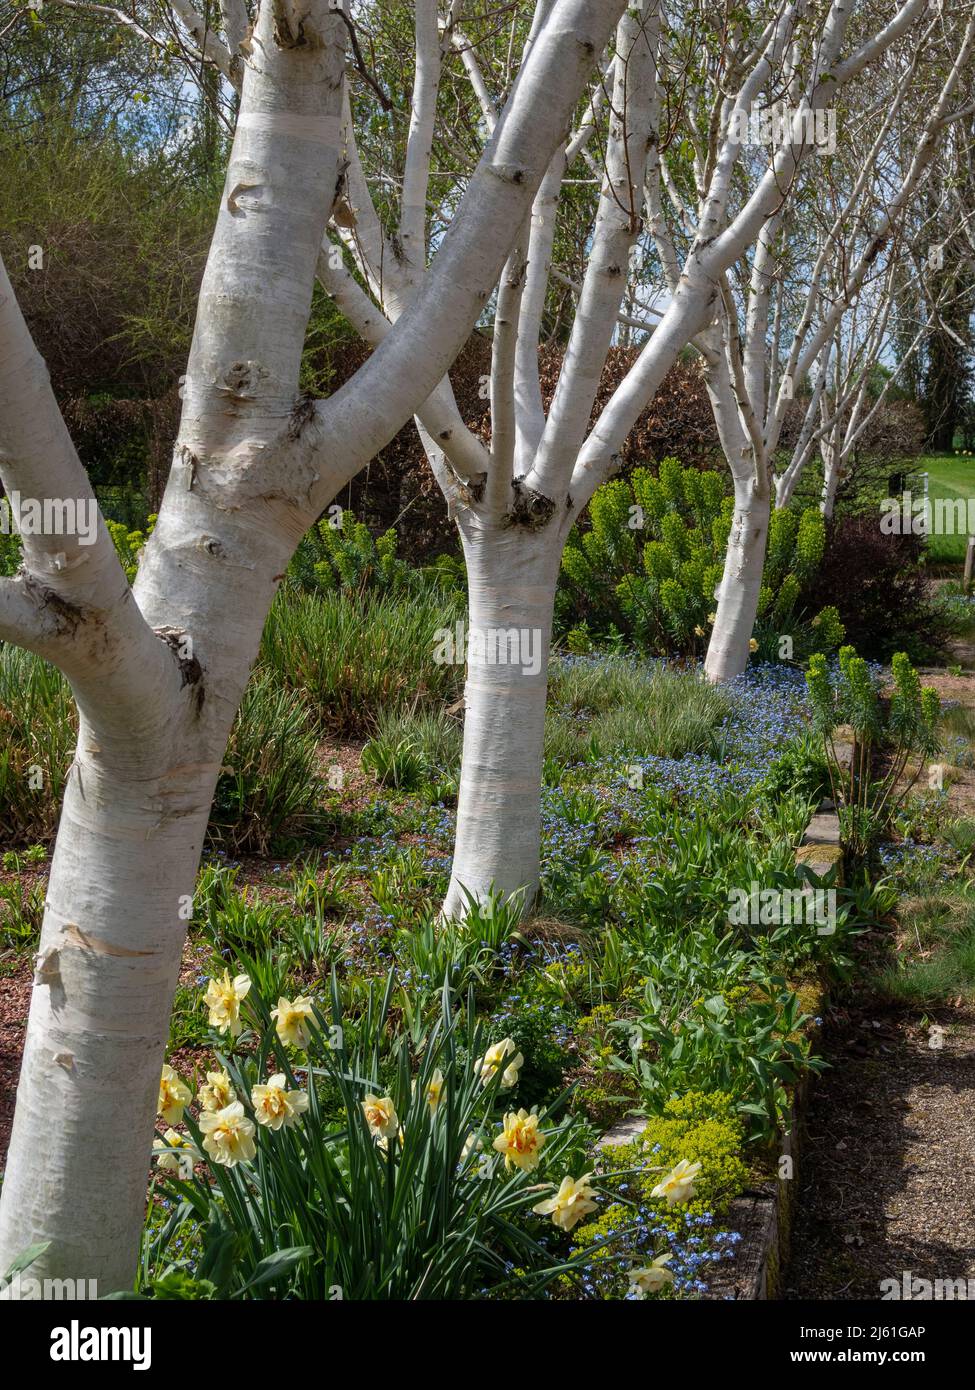 Alberi di betulla a stelo bianco, Betula utilis jacquemontii, Kathy Brown's Garden, Stevington, Bedfordshire, REGNO UNITO Foto Stock